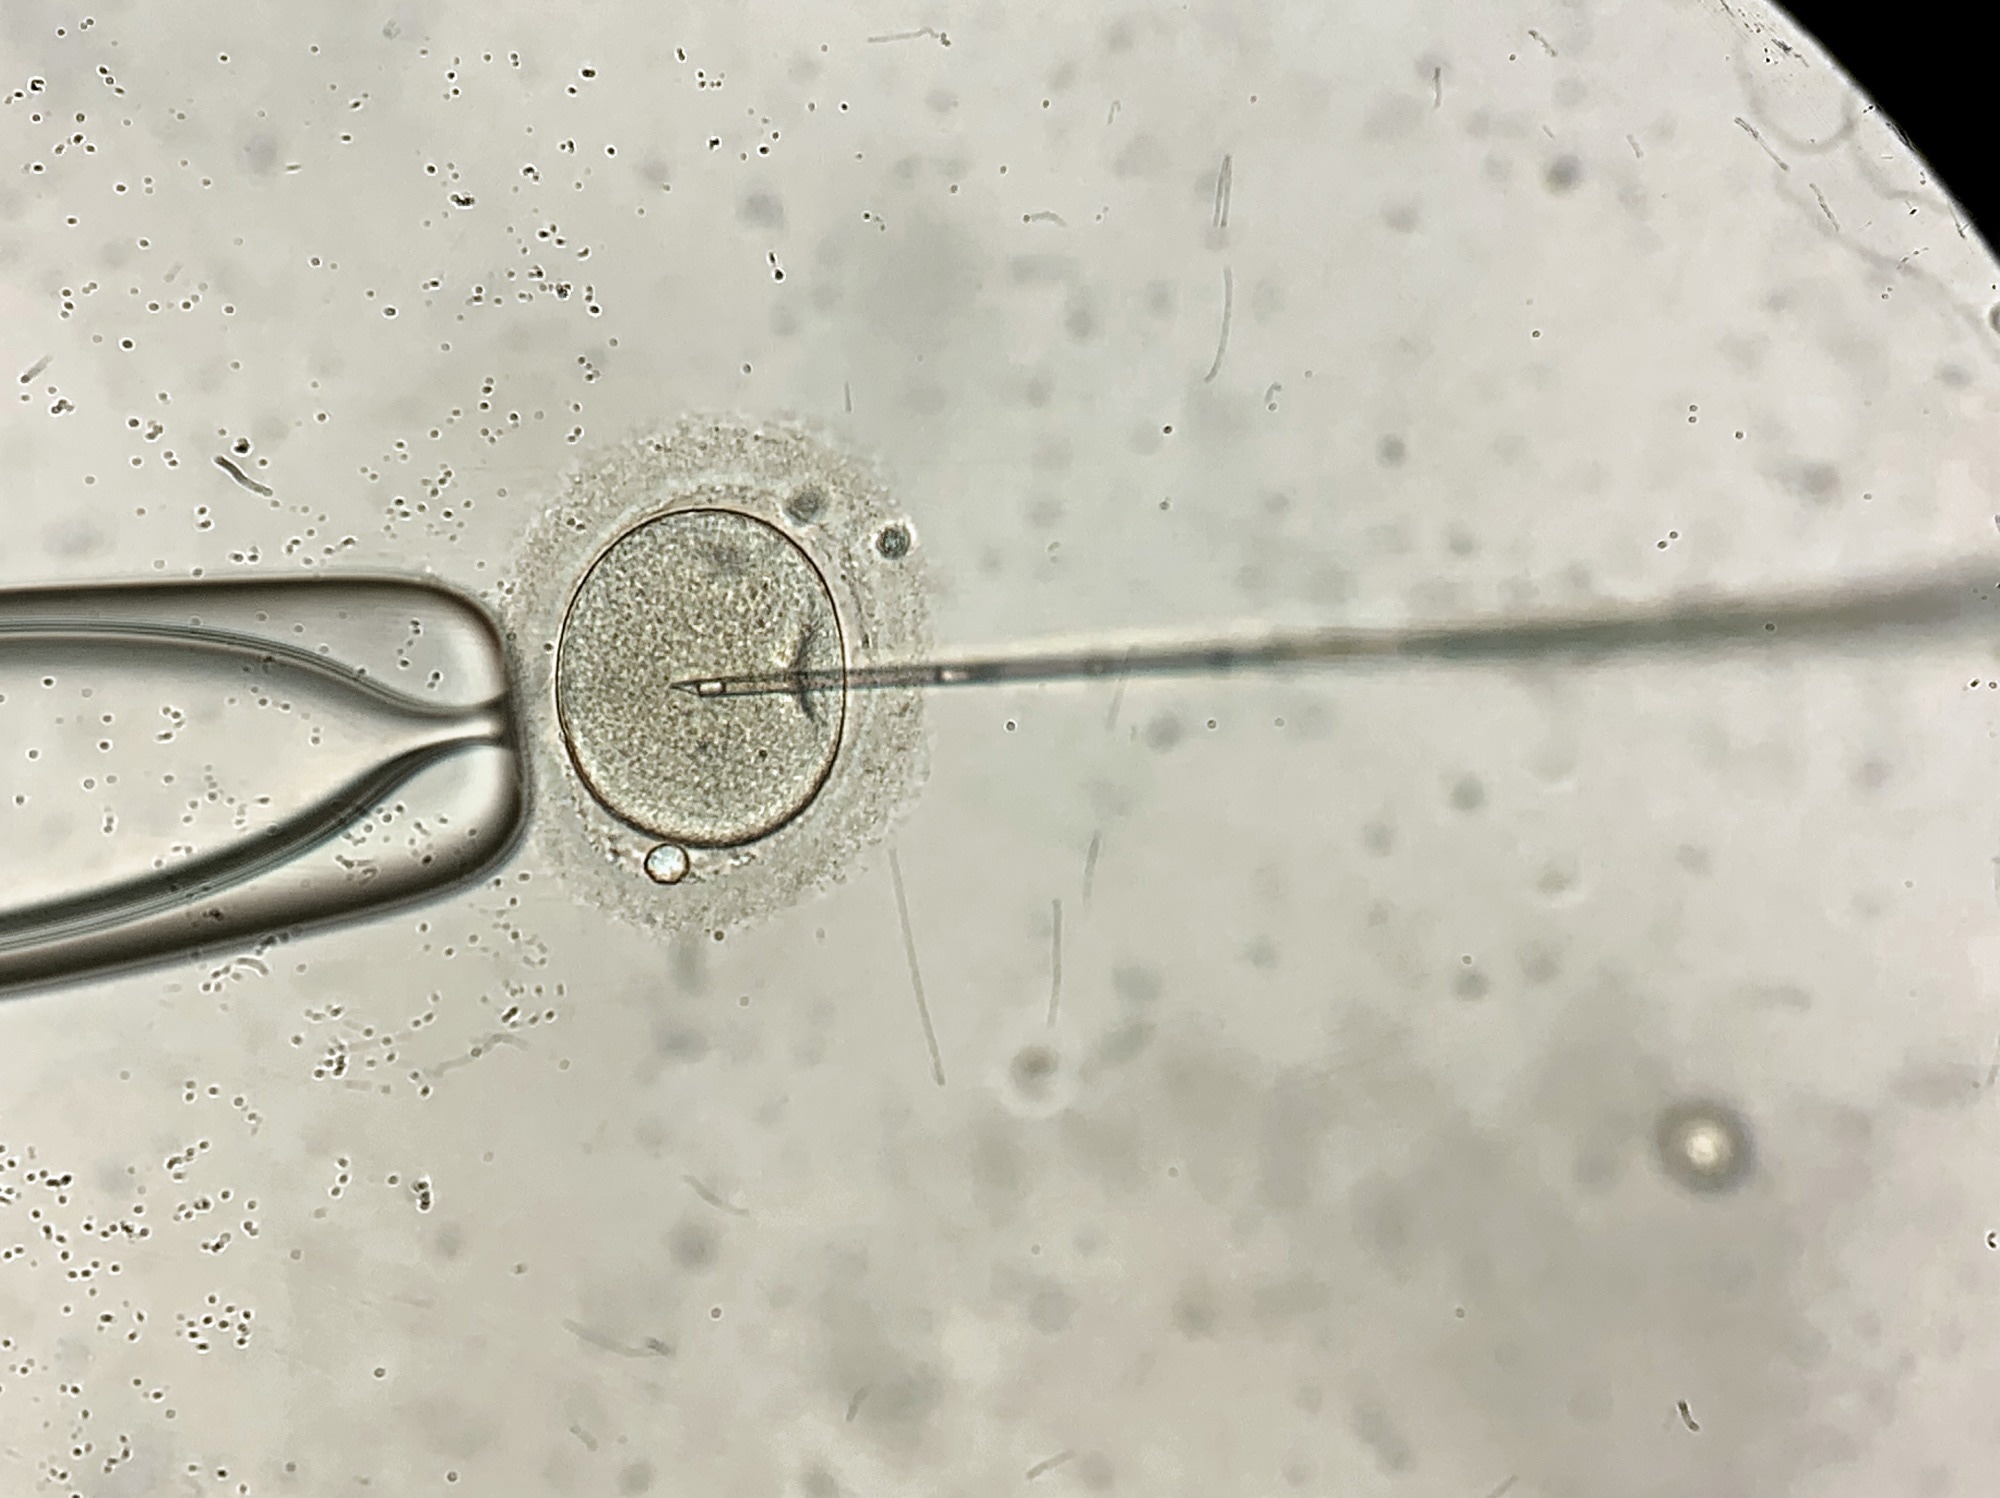 Process of the in vitro fertilization of a female egg inside IVF dish in the laboratory.. Image Credit: bezikus / Shutterstock